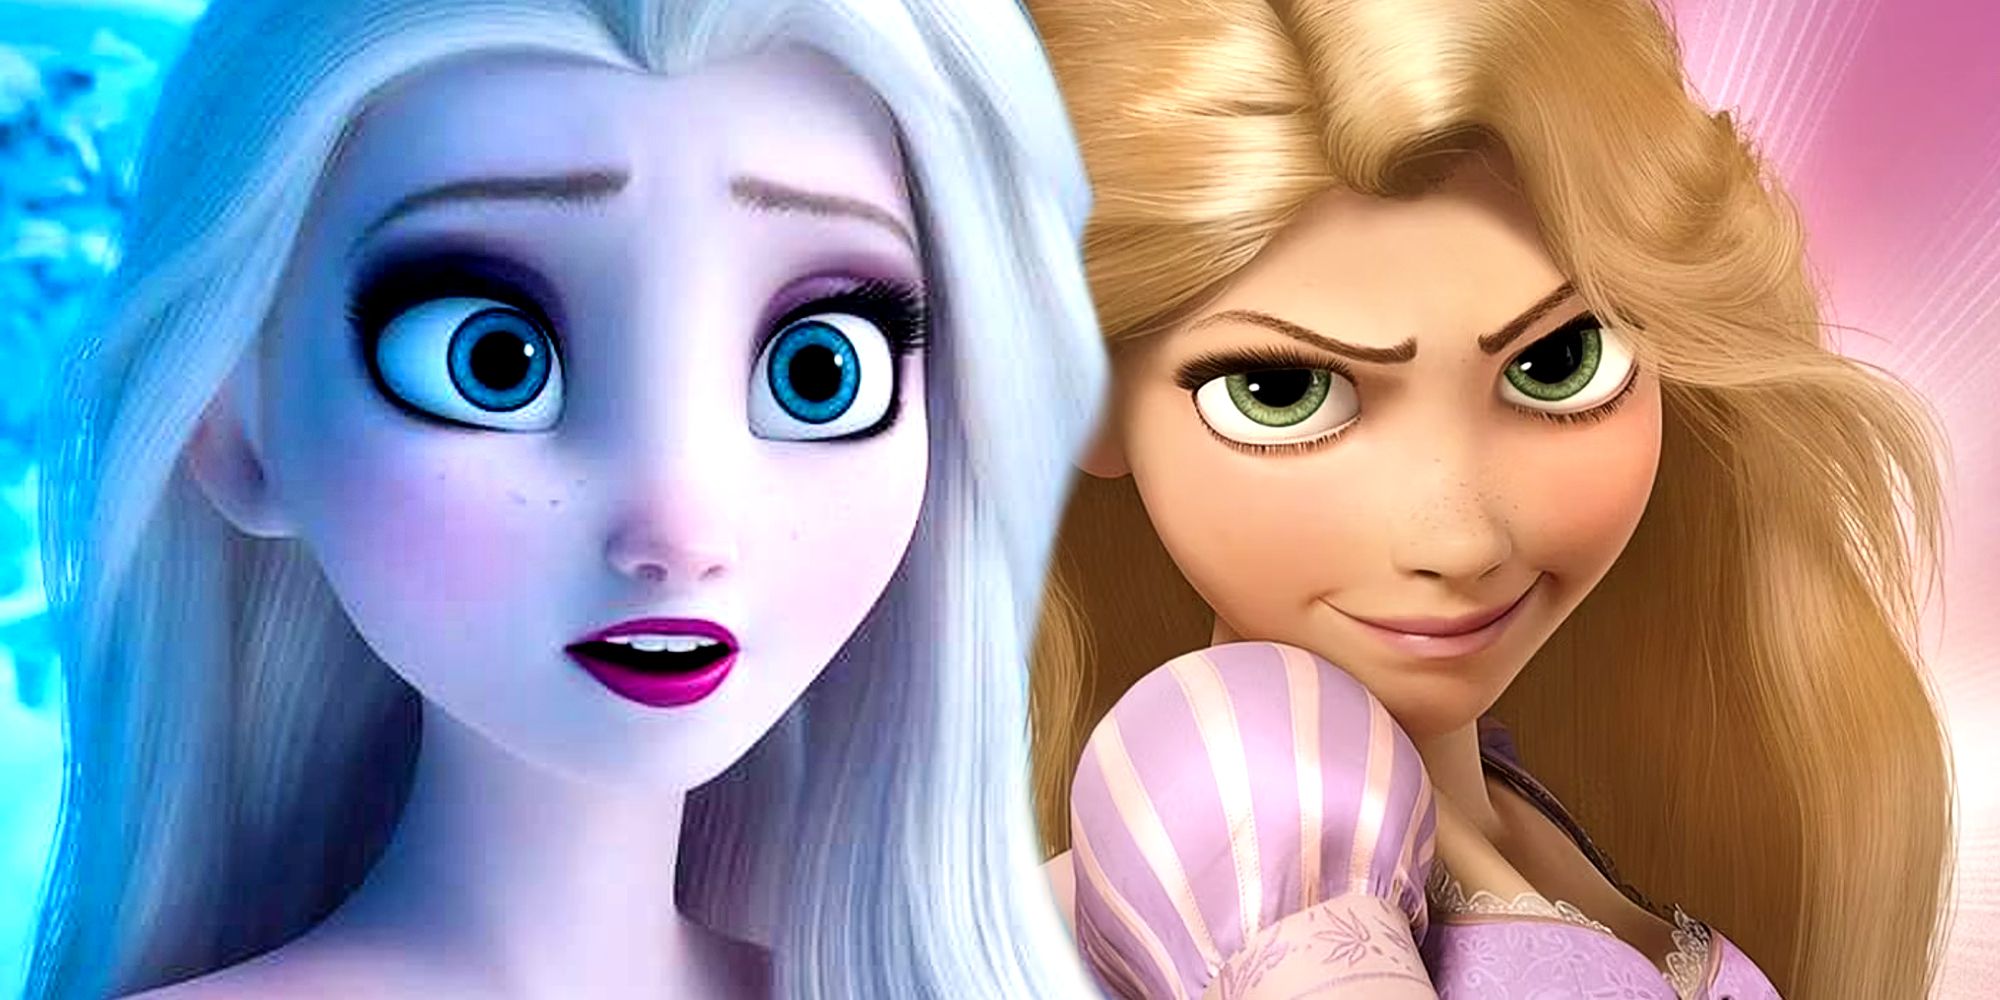 Frozen's Elsa and Tangled's Rapunzel